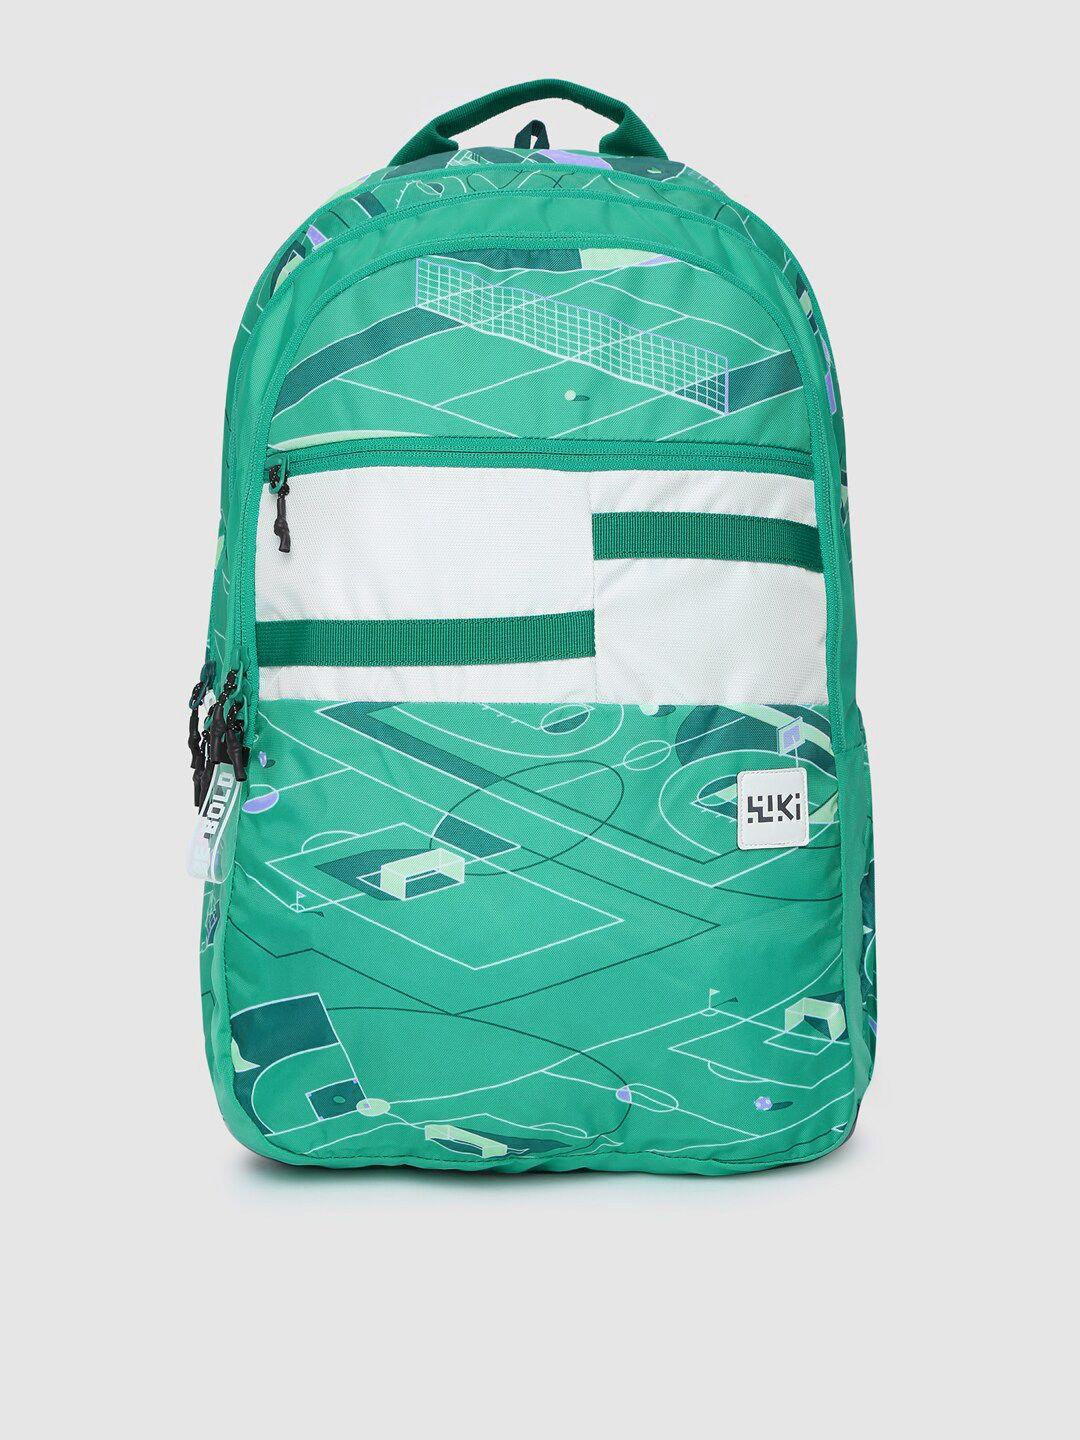 wildcraft unisex green graphic backpack